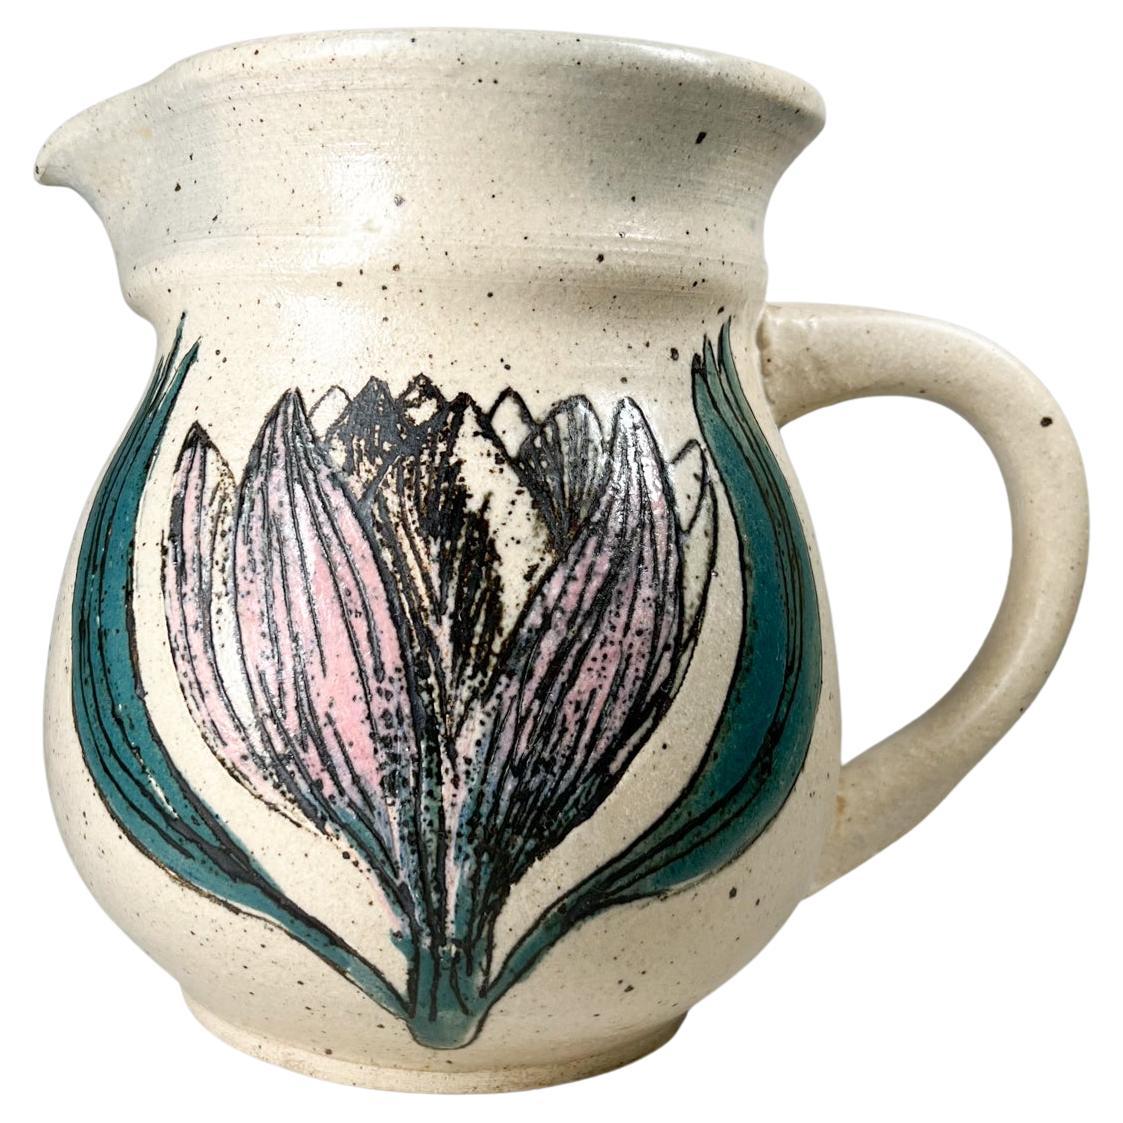 Midcentury Modern Art Pottery Modernist Flower Pitcher Signed